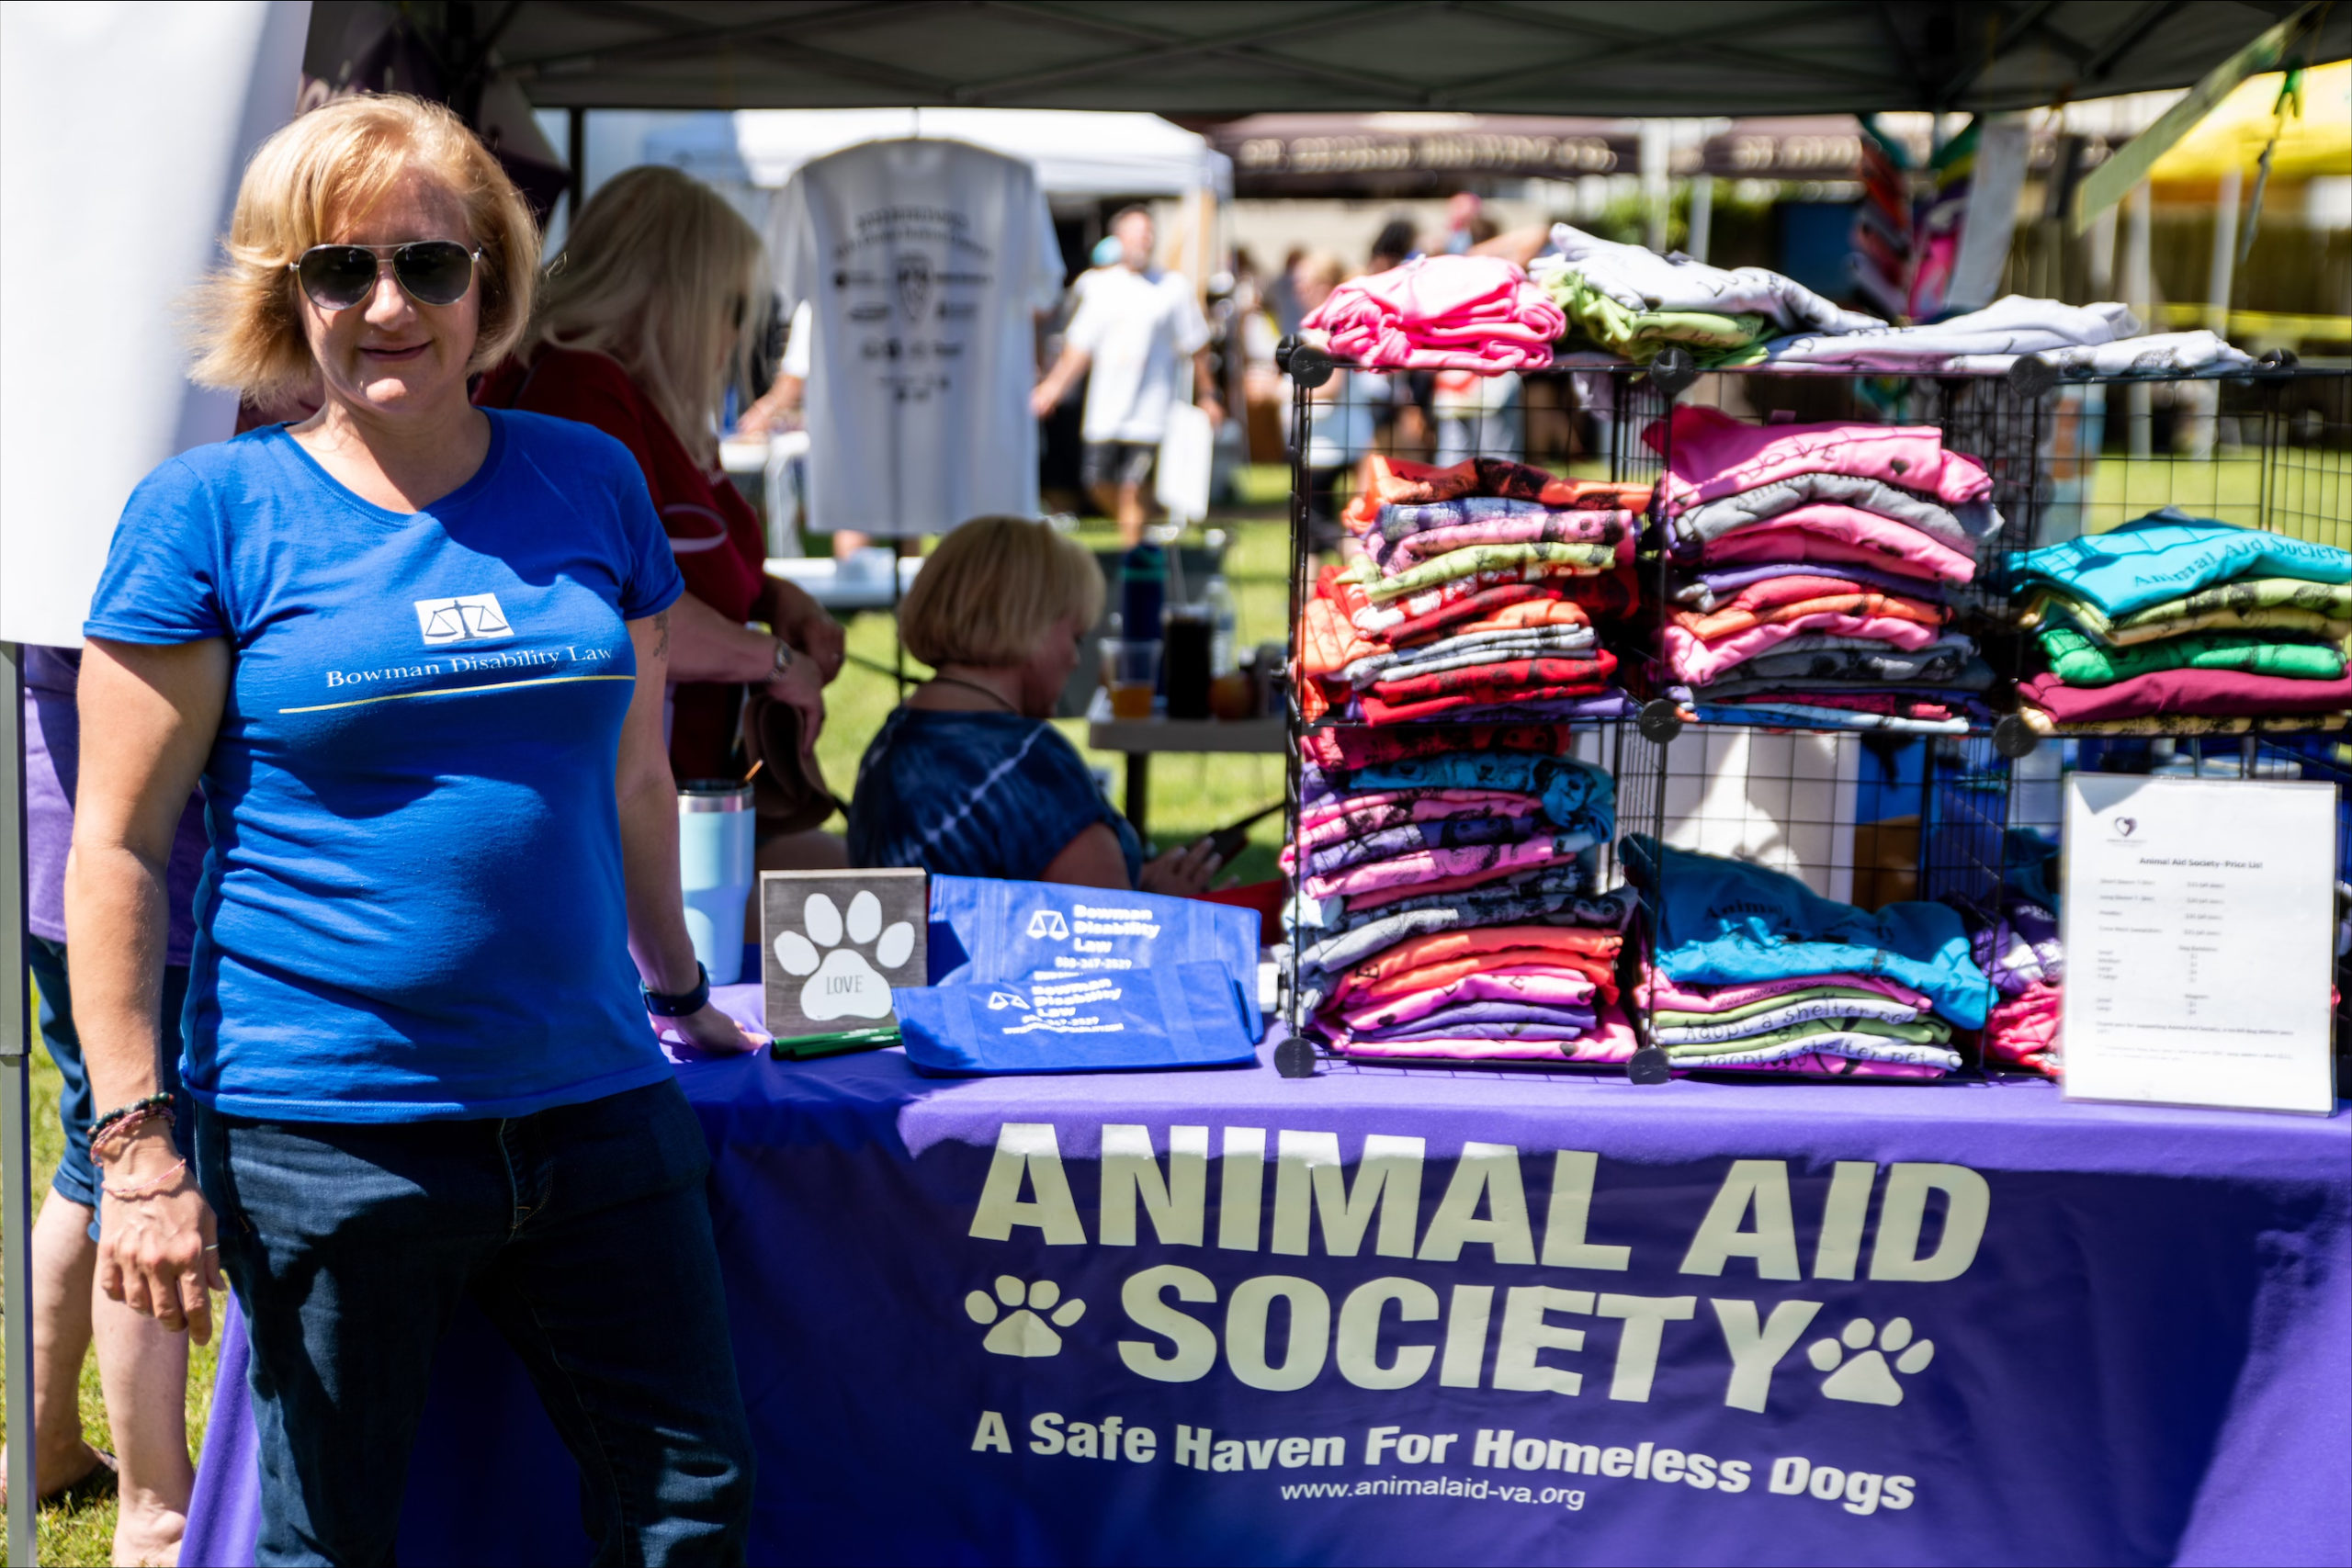 Hampton’s Animal Aid Society